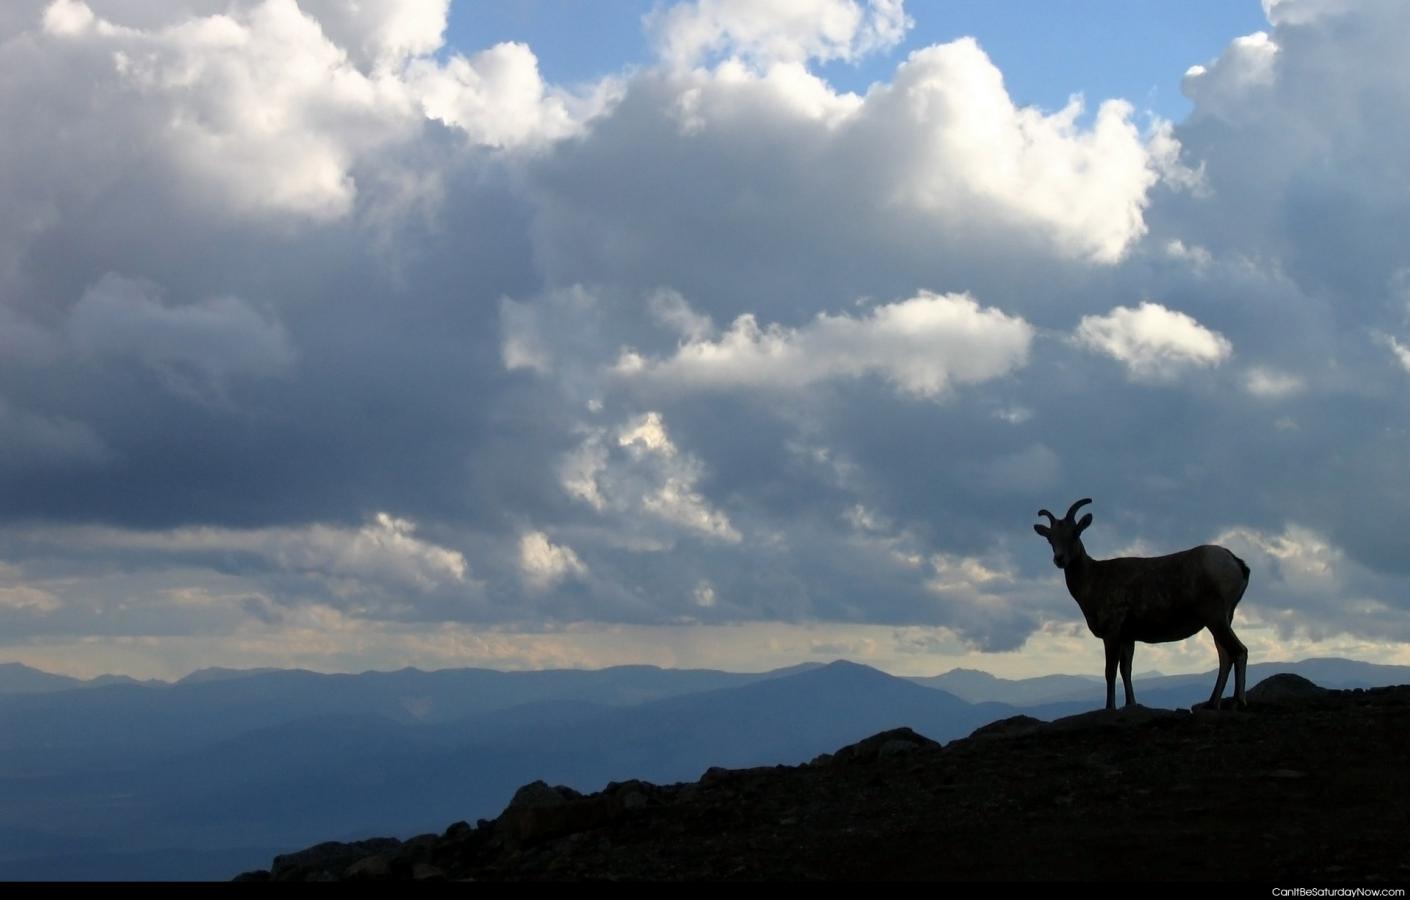 Deer mountain - deer on top a mountain